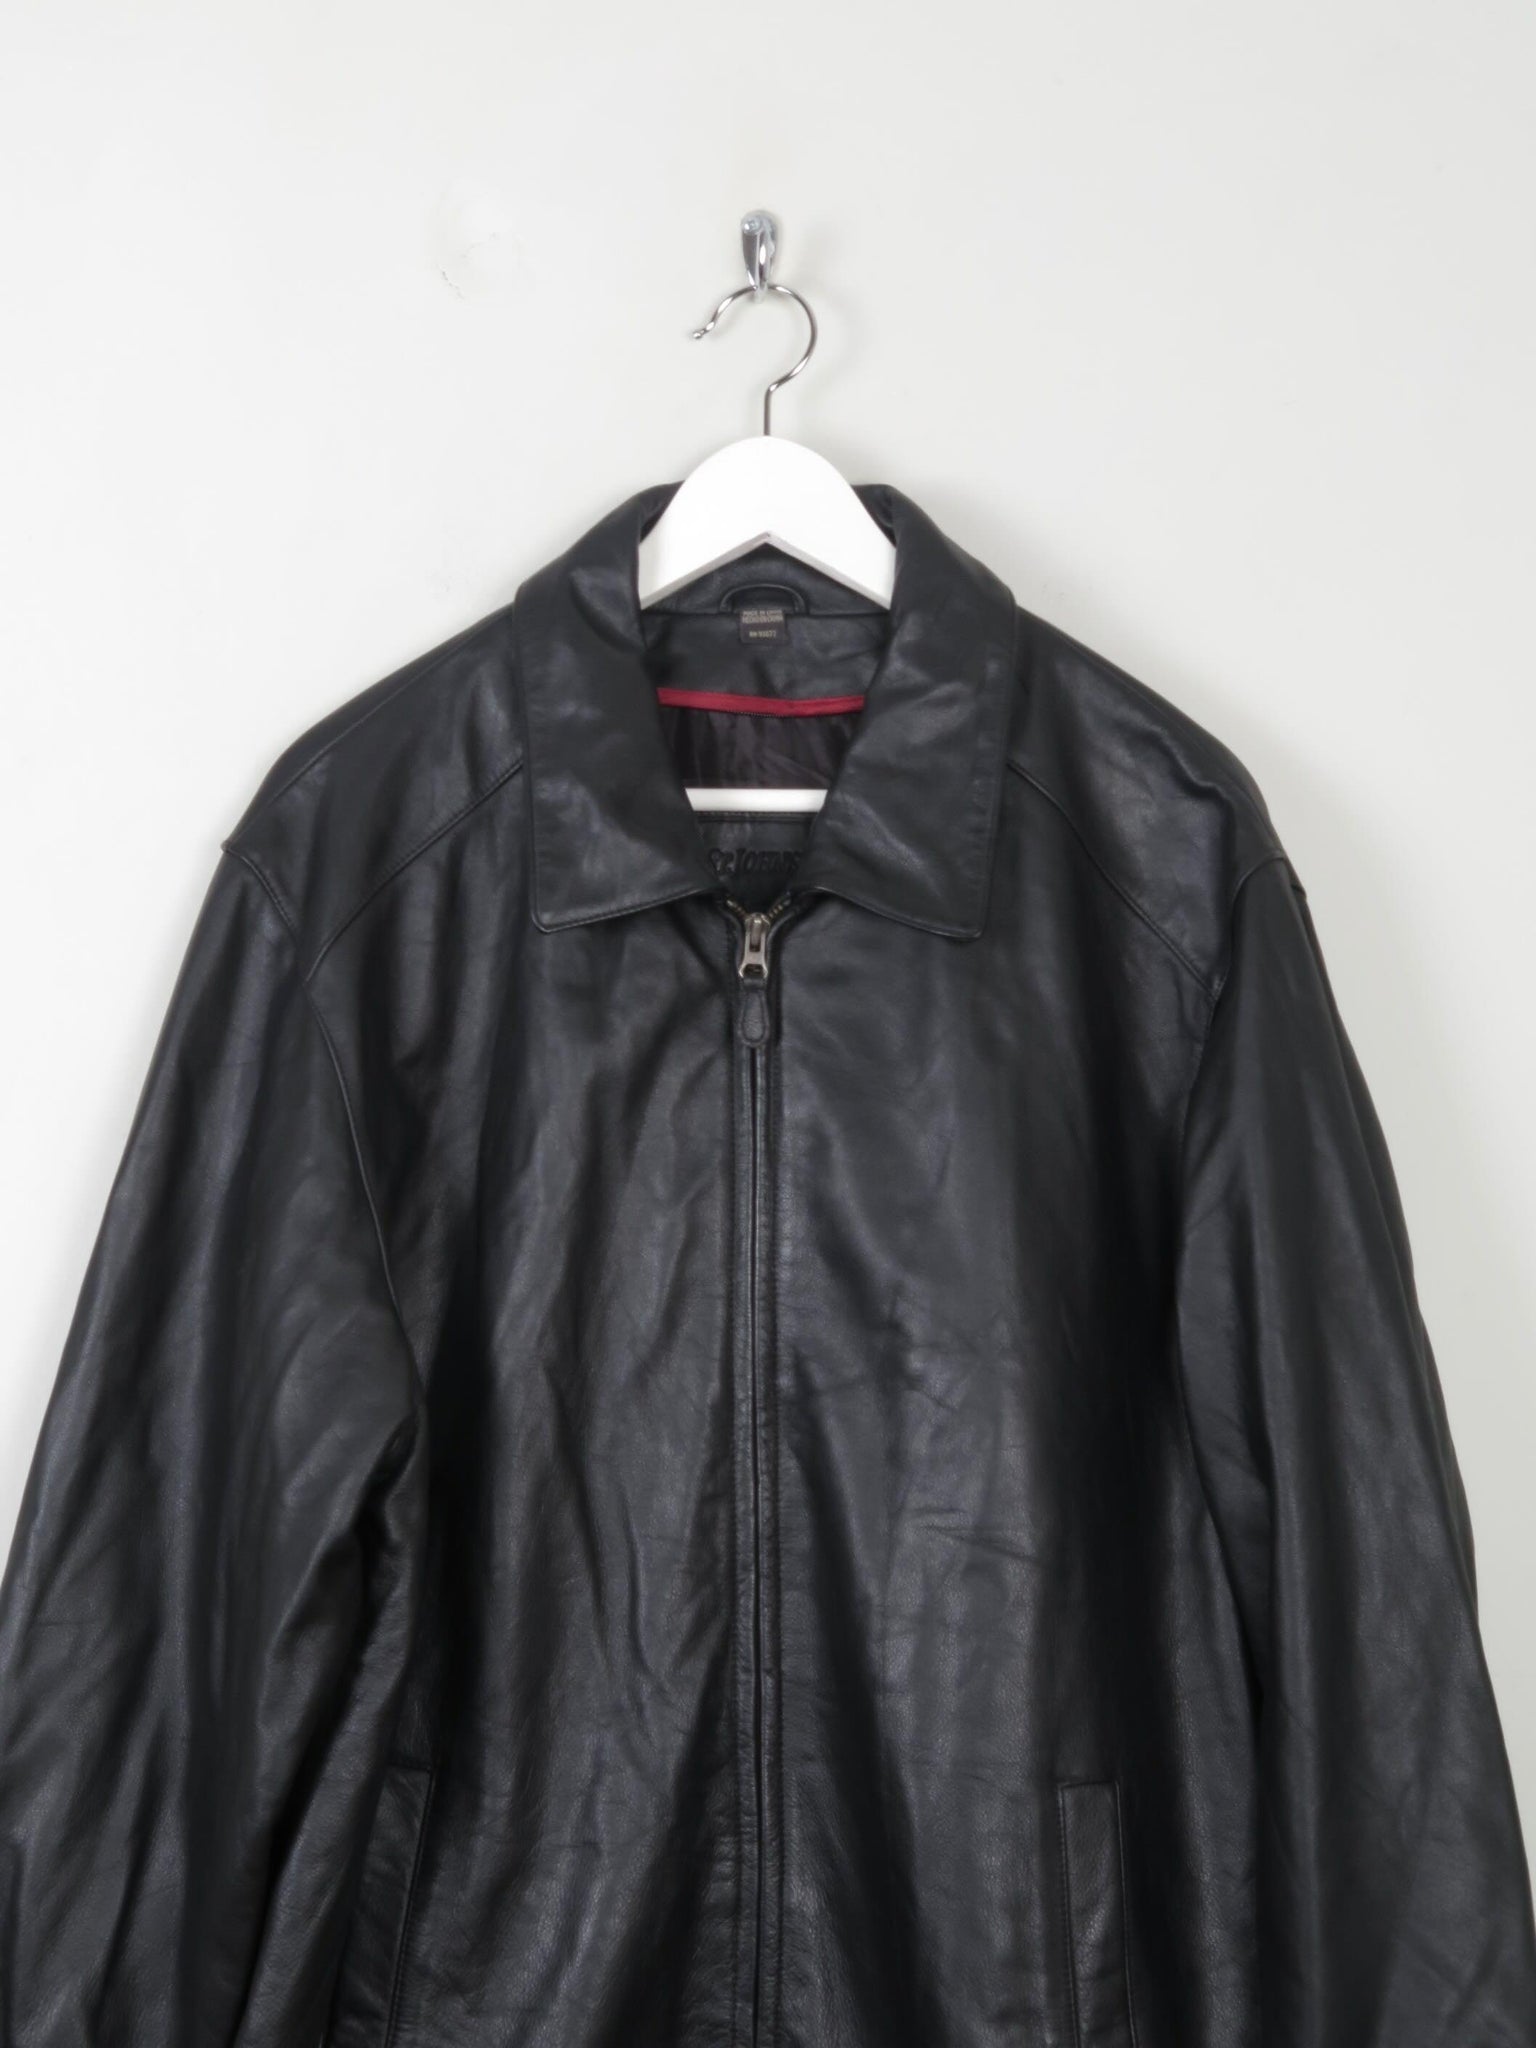 Men's Vintage Black Leather Jacket With Zip L/XL - The Harlequin